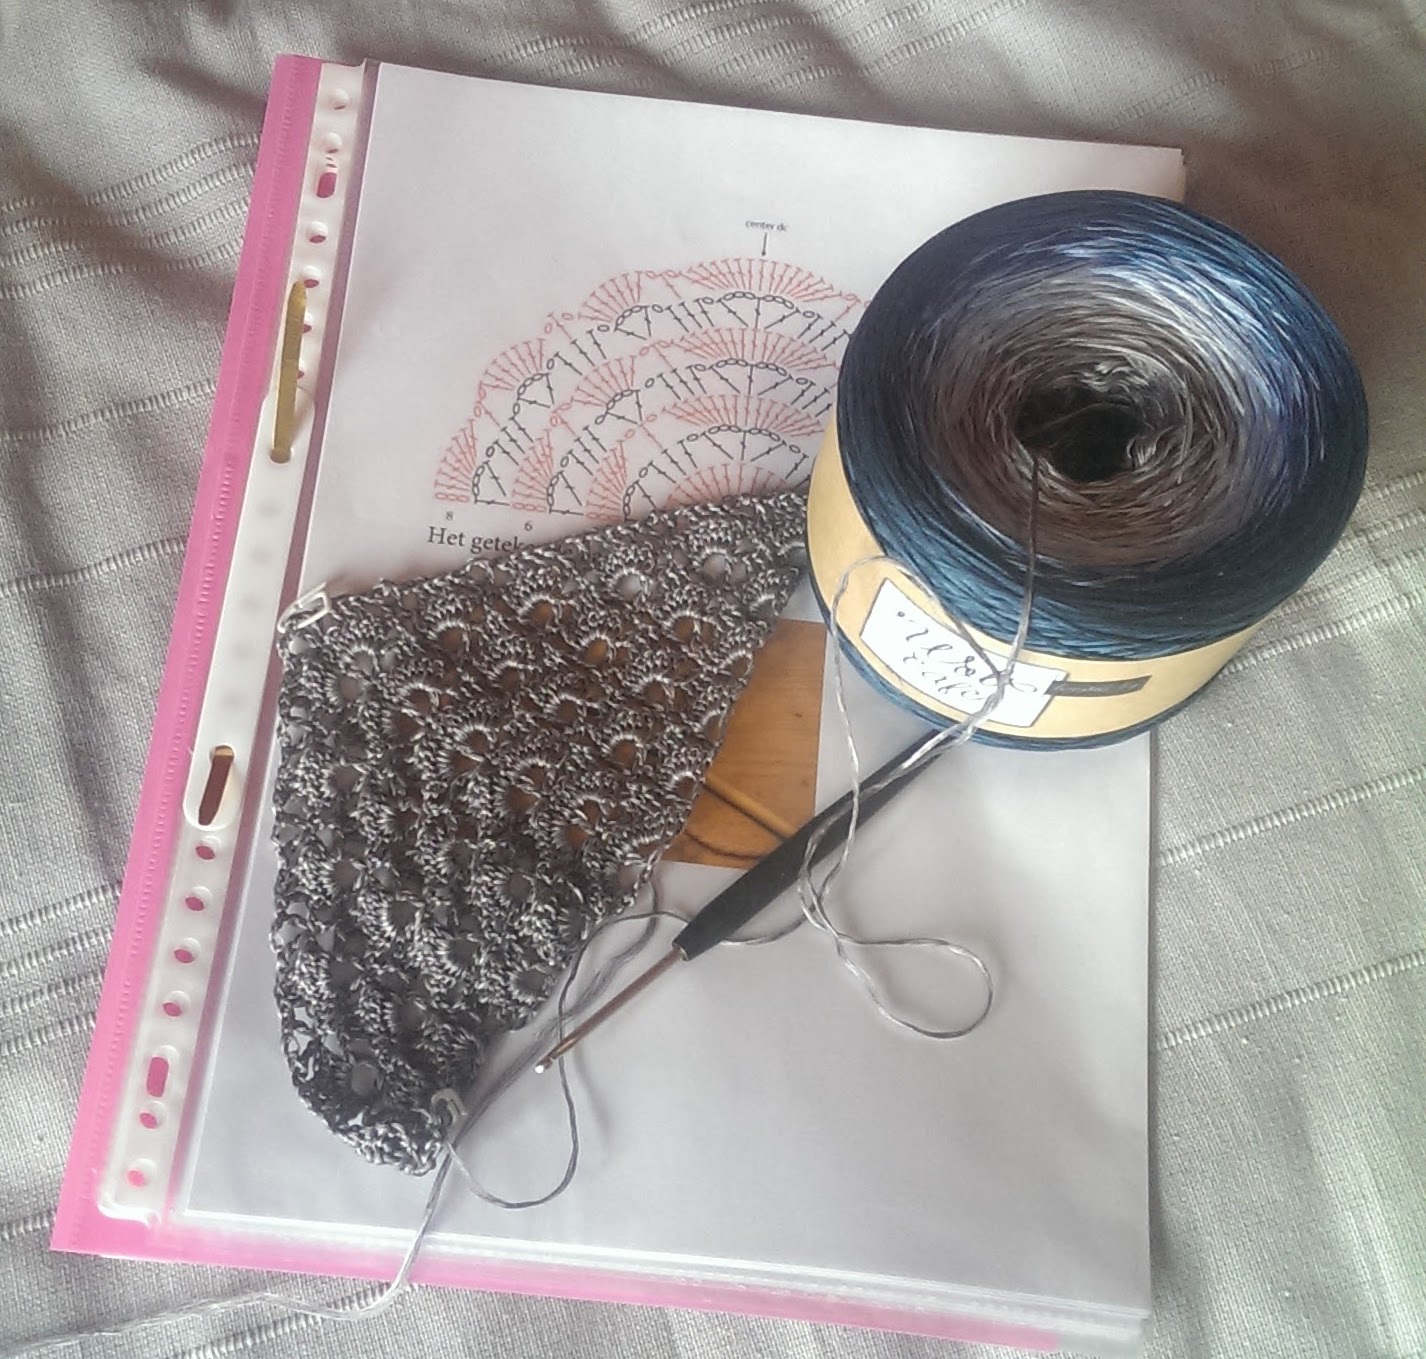 Spiksplinternieuw South Bay sjaal 'Limited By' – Maike's HobbyBlog FB-91